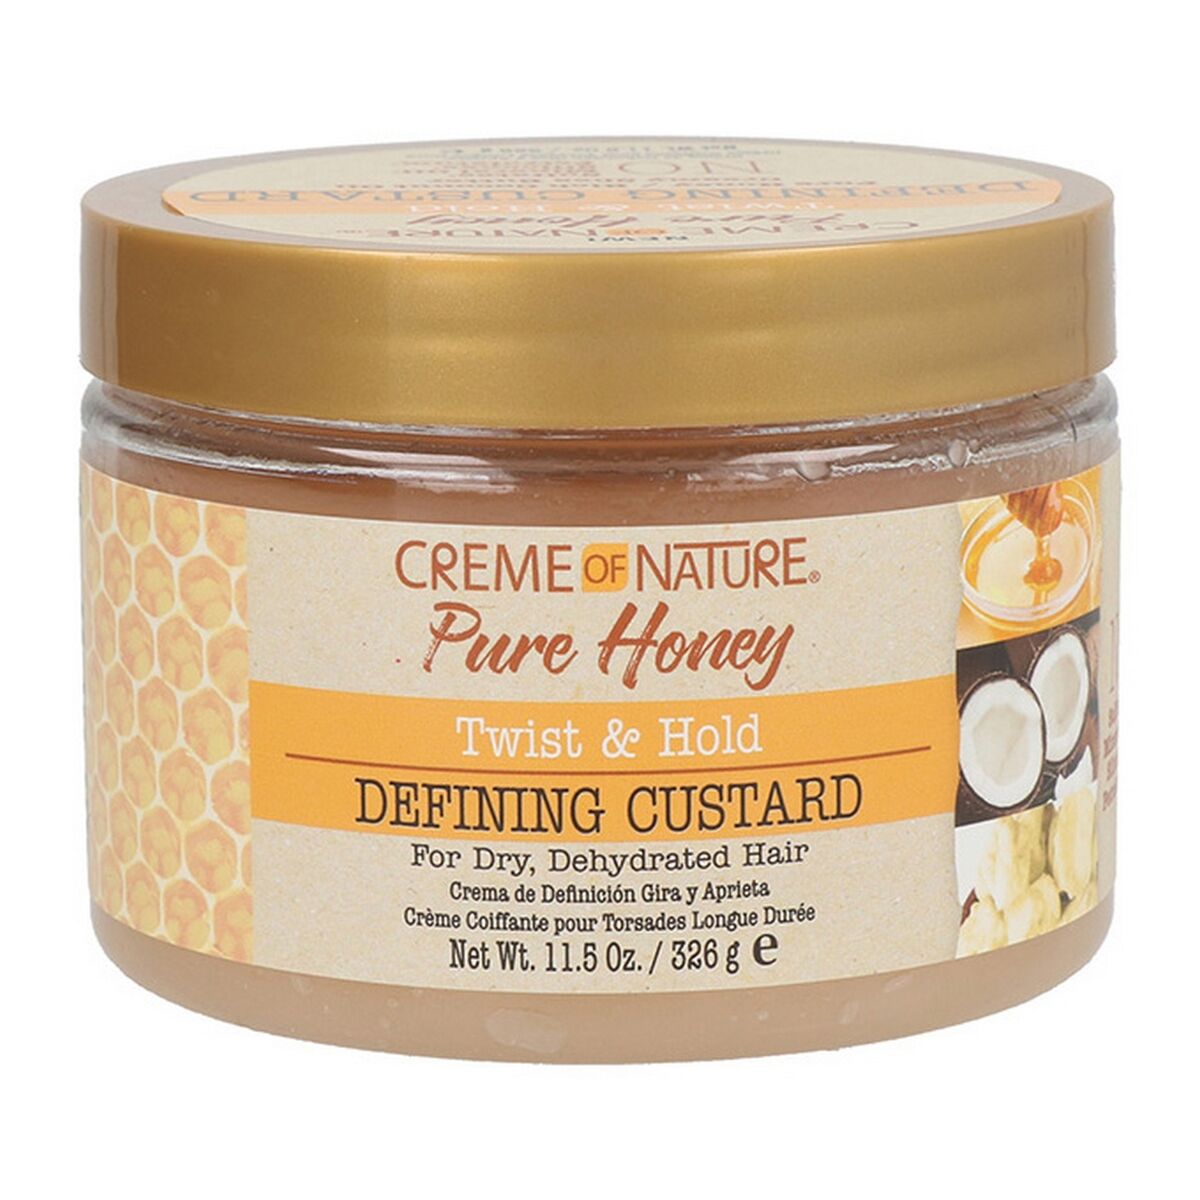 Conditioner Creme der Natur Ure Honey Twisted & Hold Defining Pudding (326 g)